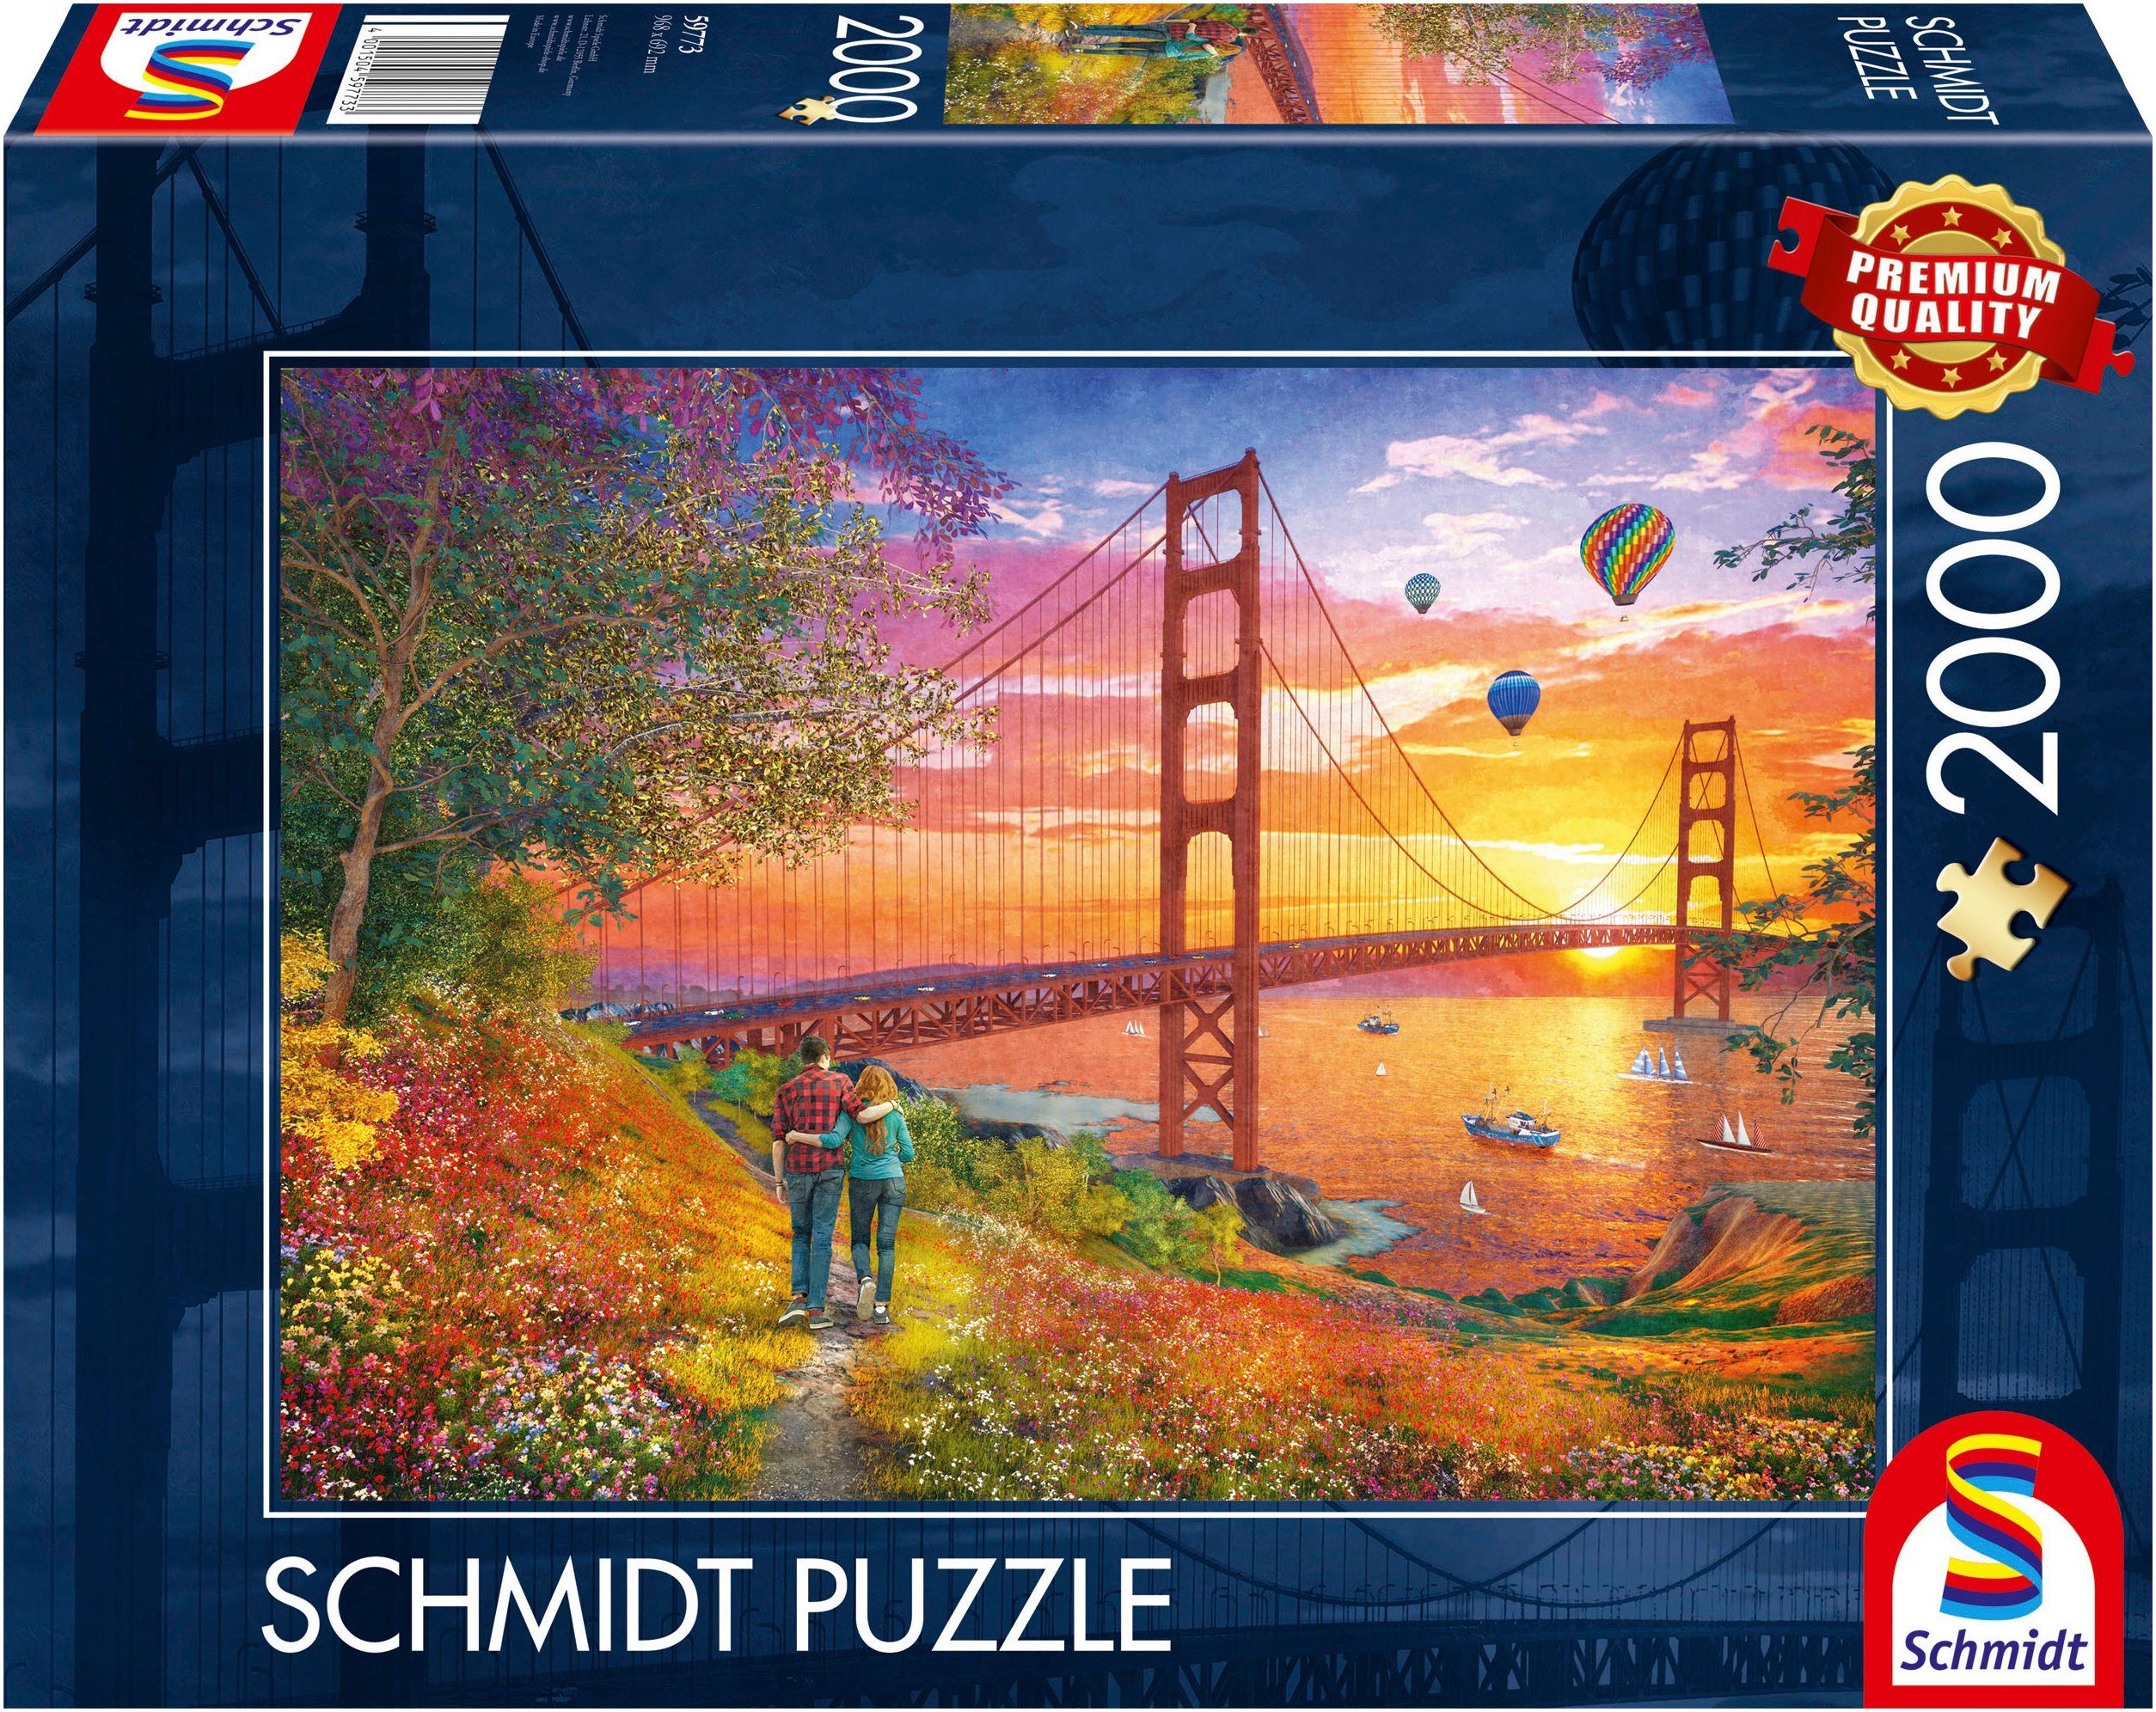 Schmidt Spiele Puzzle Spaziergang zur Golden Gate Bridge, 2000 Puzzleteile